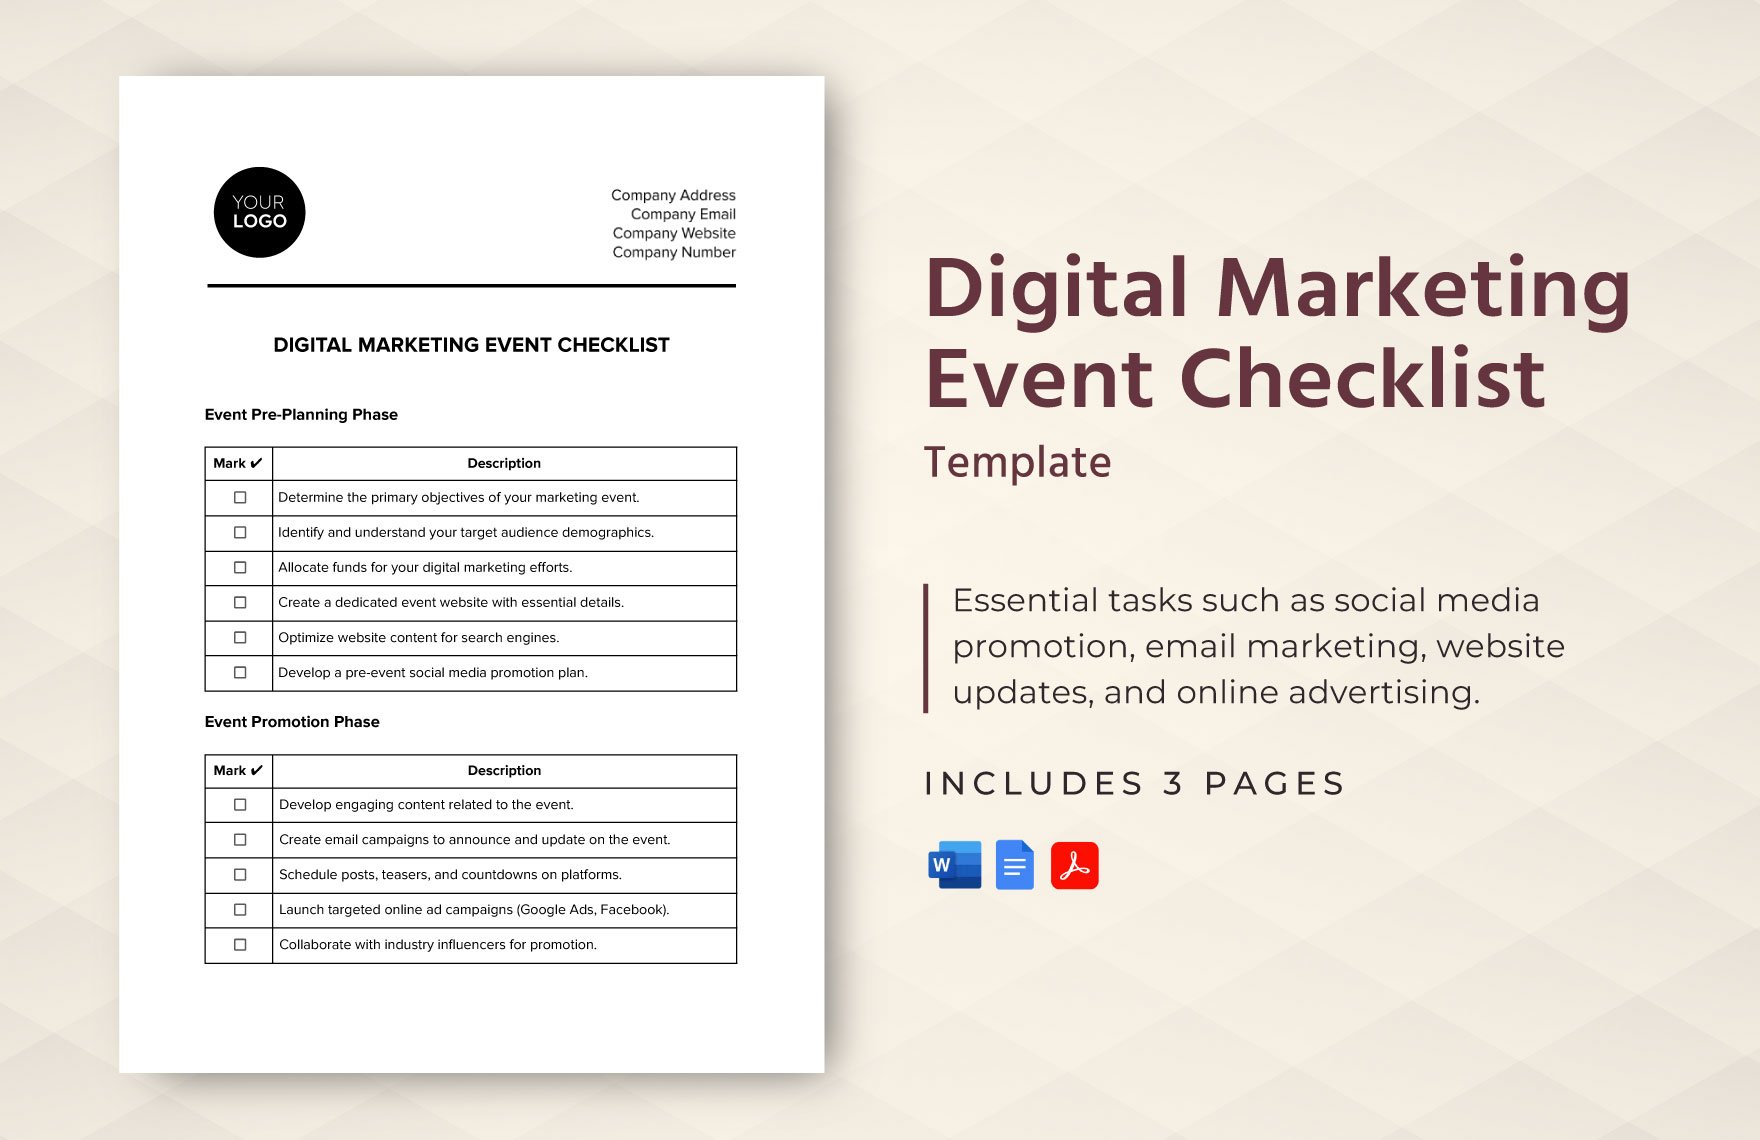 Digital Marketing Event Checklist Template in Word, Google Docs, PDF